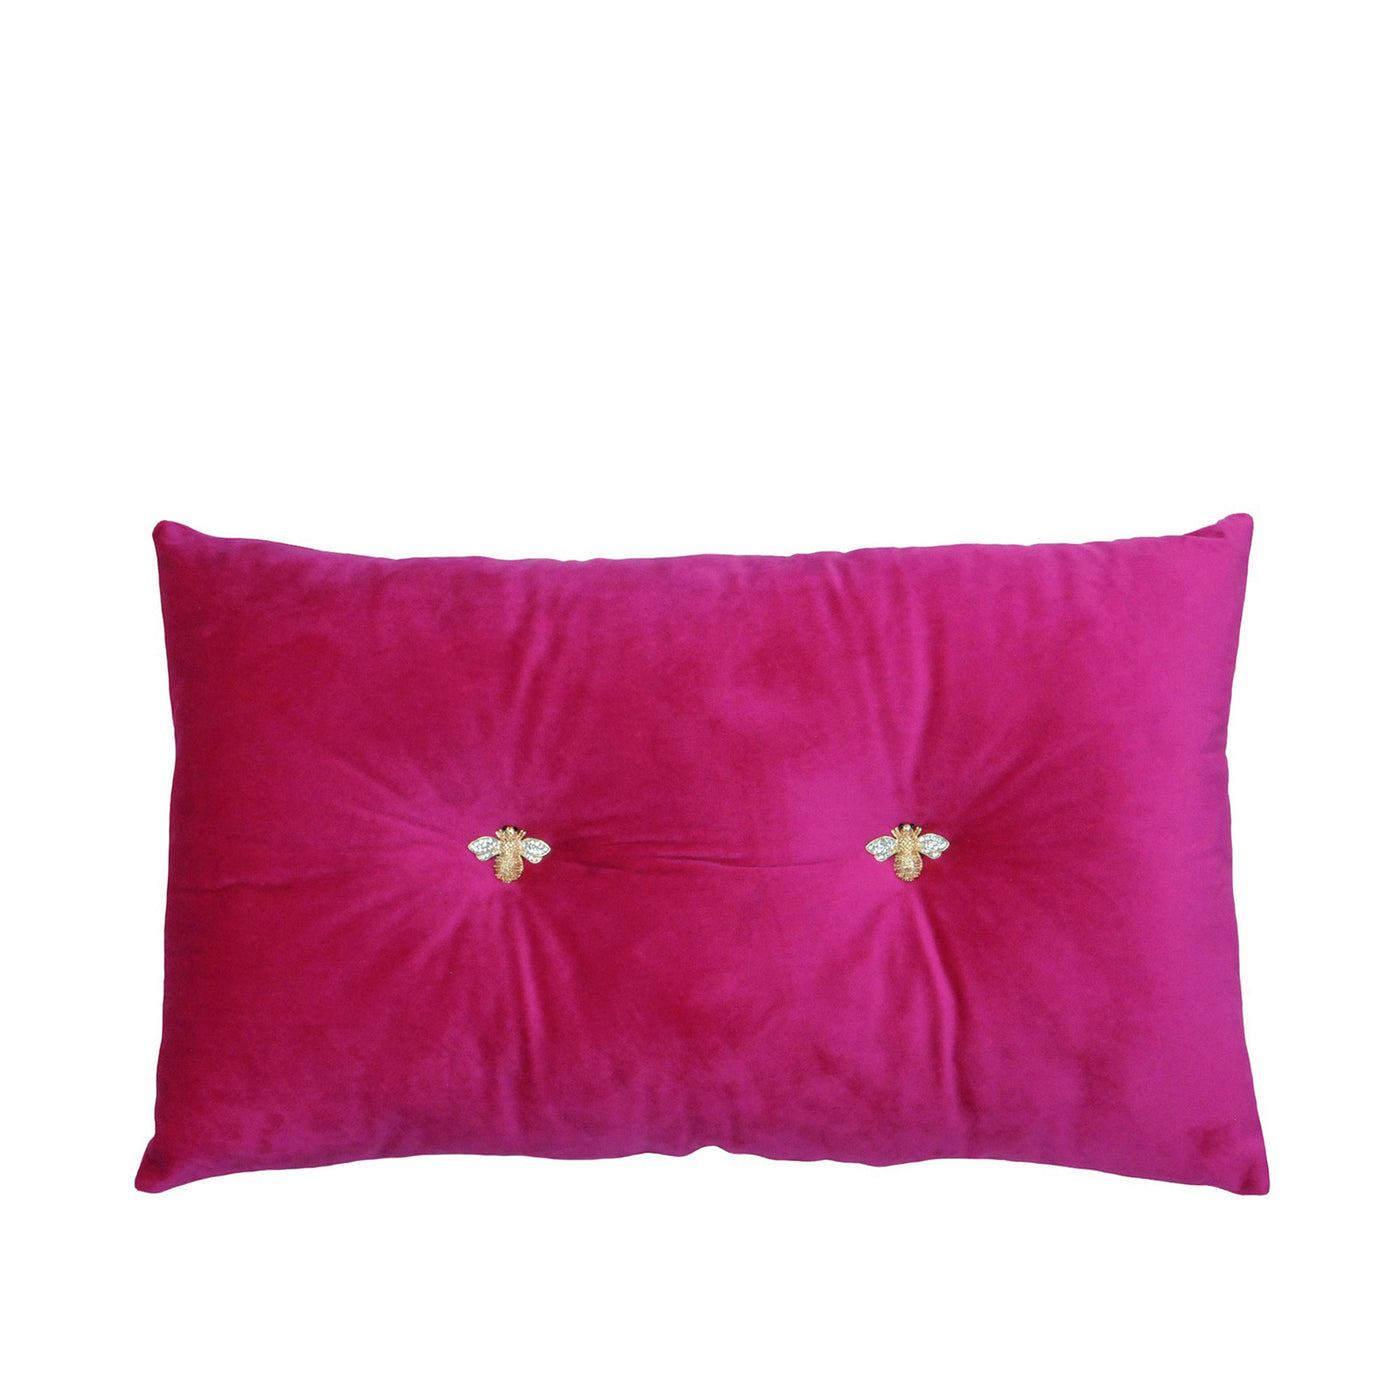 Cushion - Bee Velvet Fuchsia Pink 30x50cm